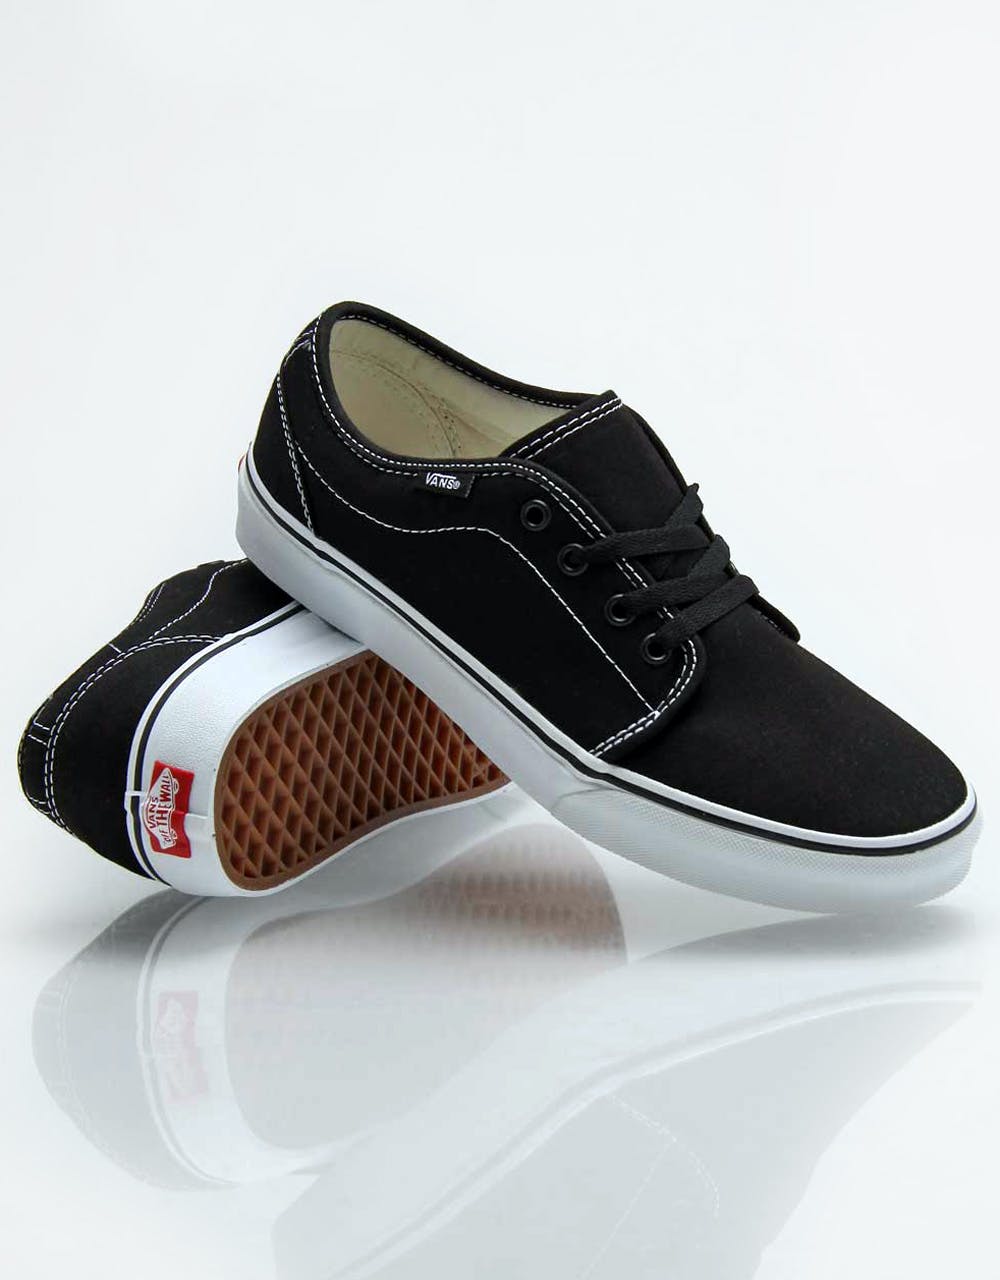 Vans 106 Vulc Skate Shoes - Black/White